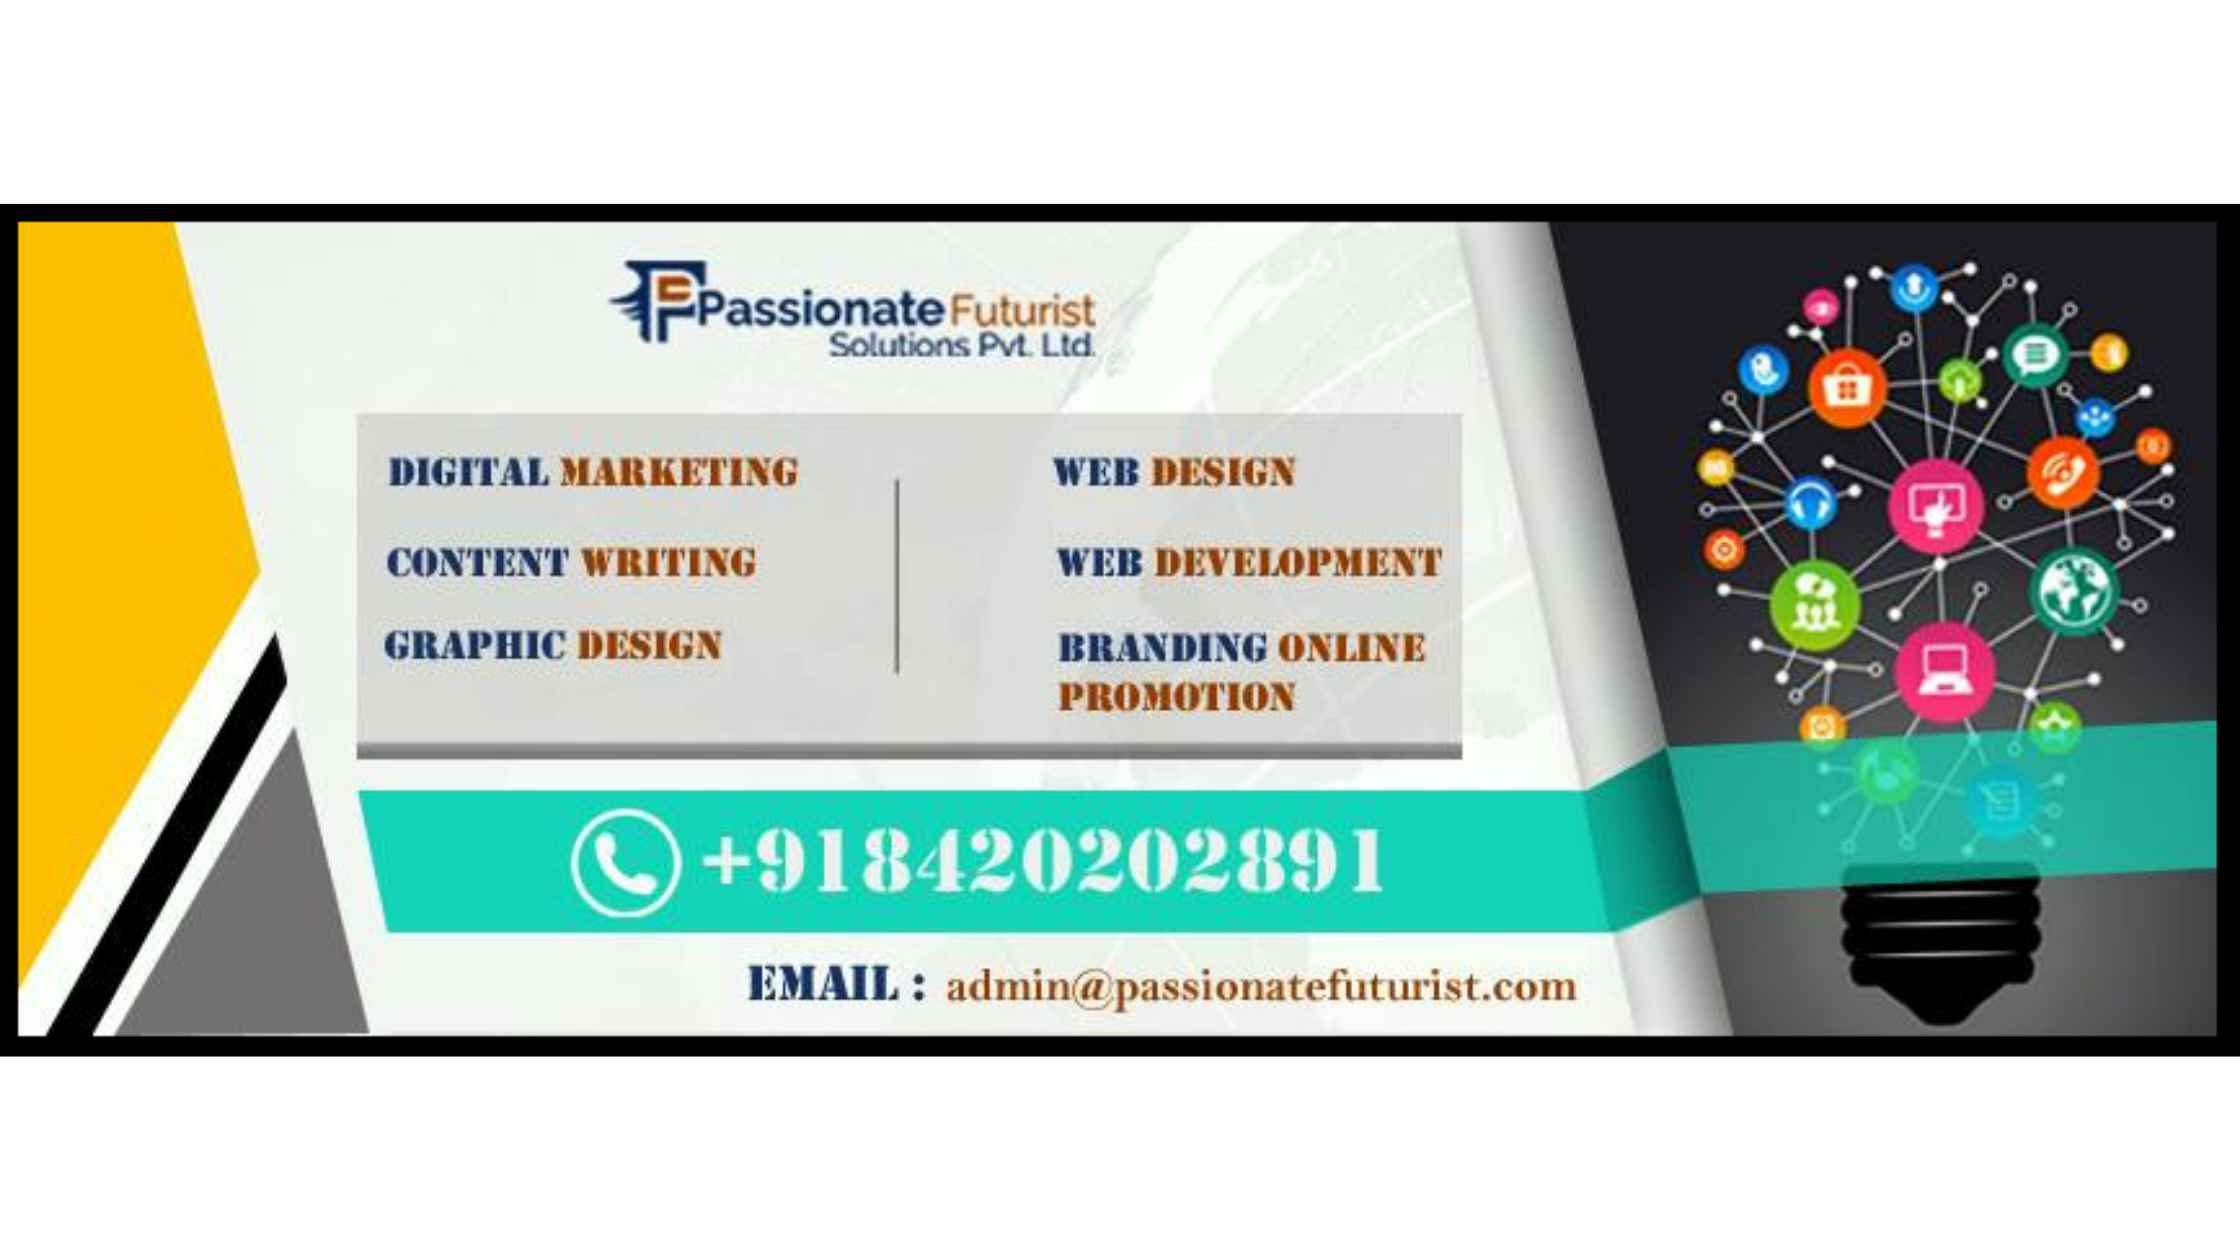 Passionate Futurist Solutions Pvt Ltd